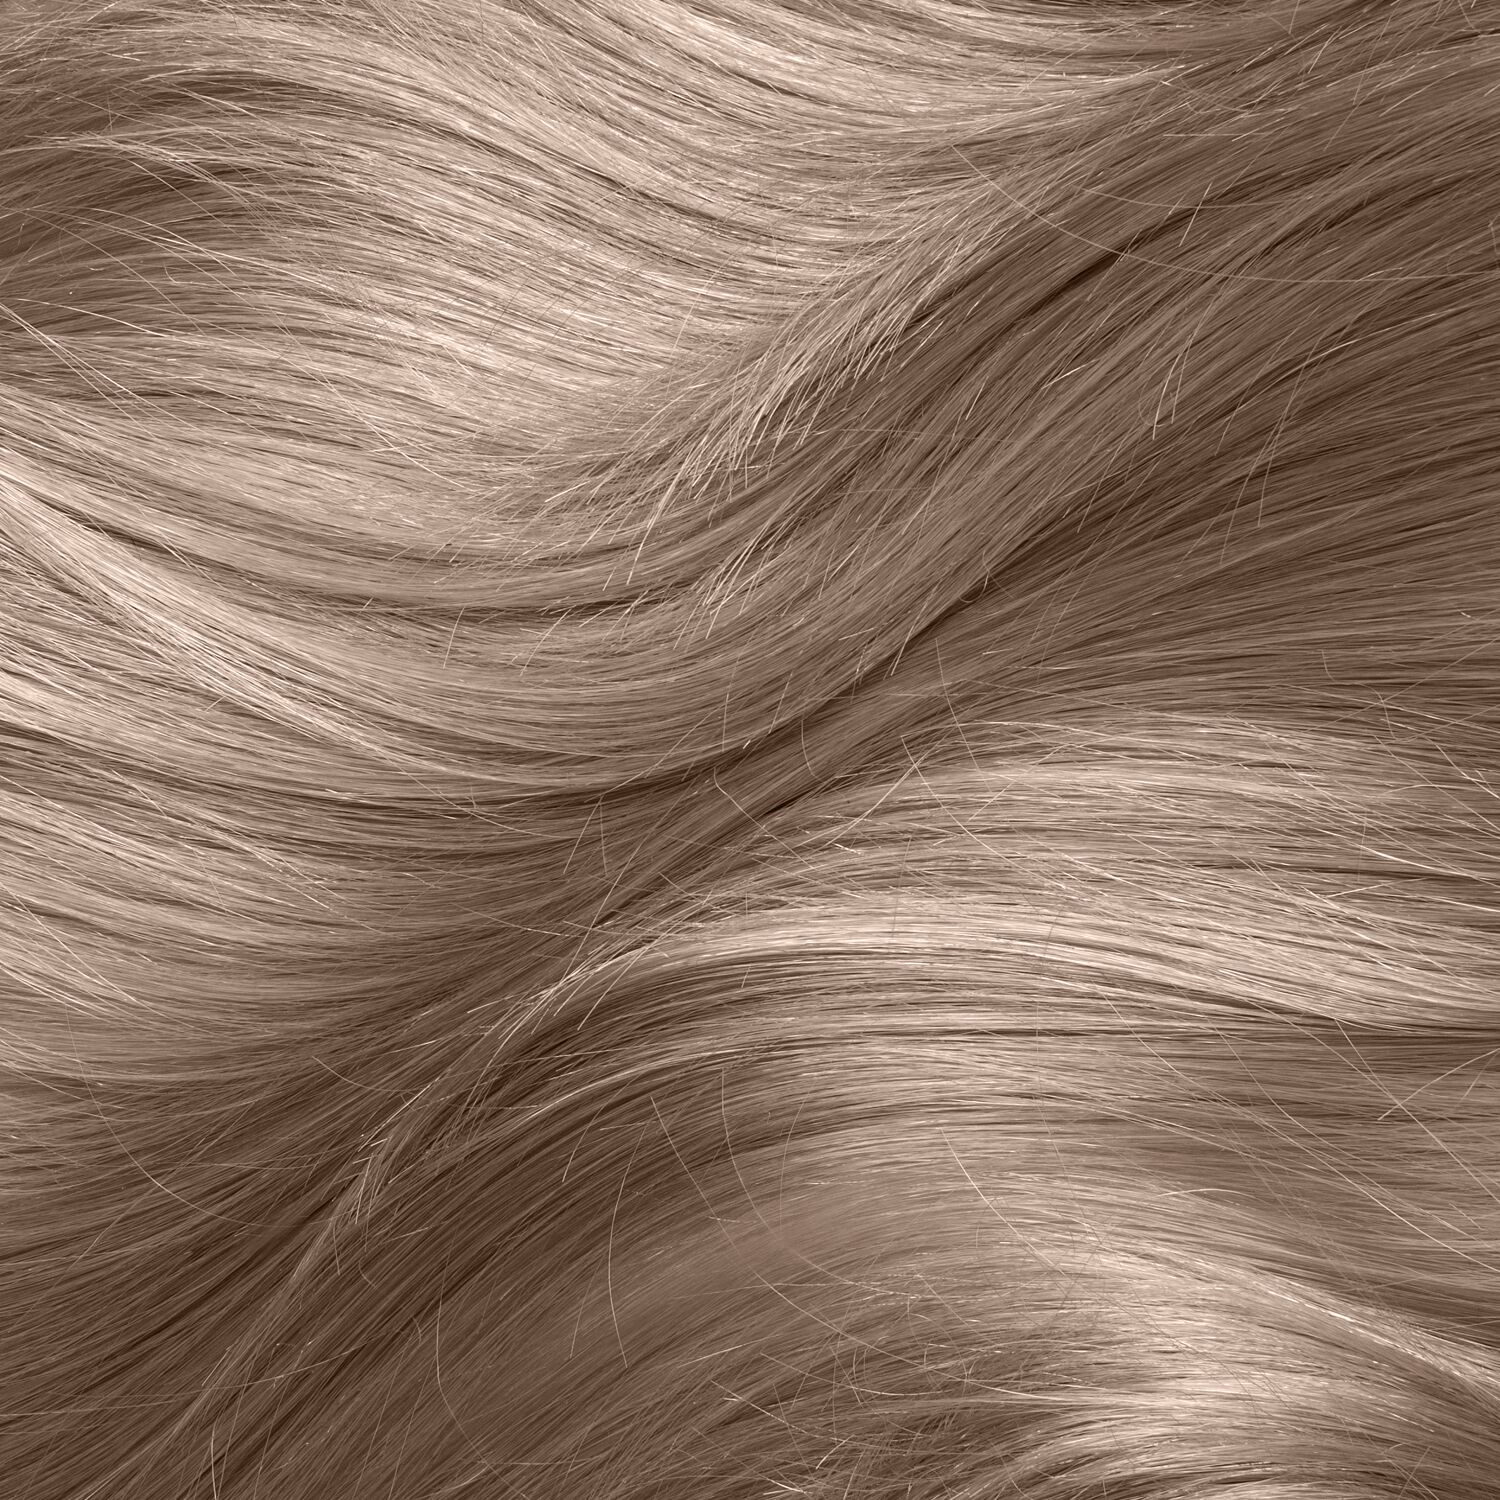 Ion 8A Light Ash Blonde Permanent Creme Hair Col